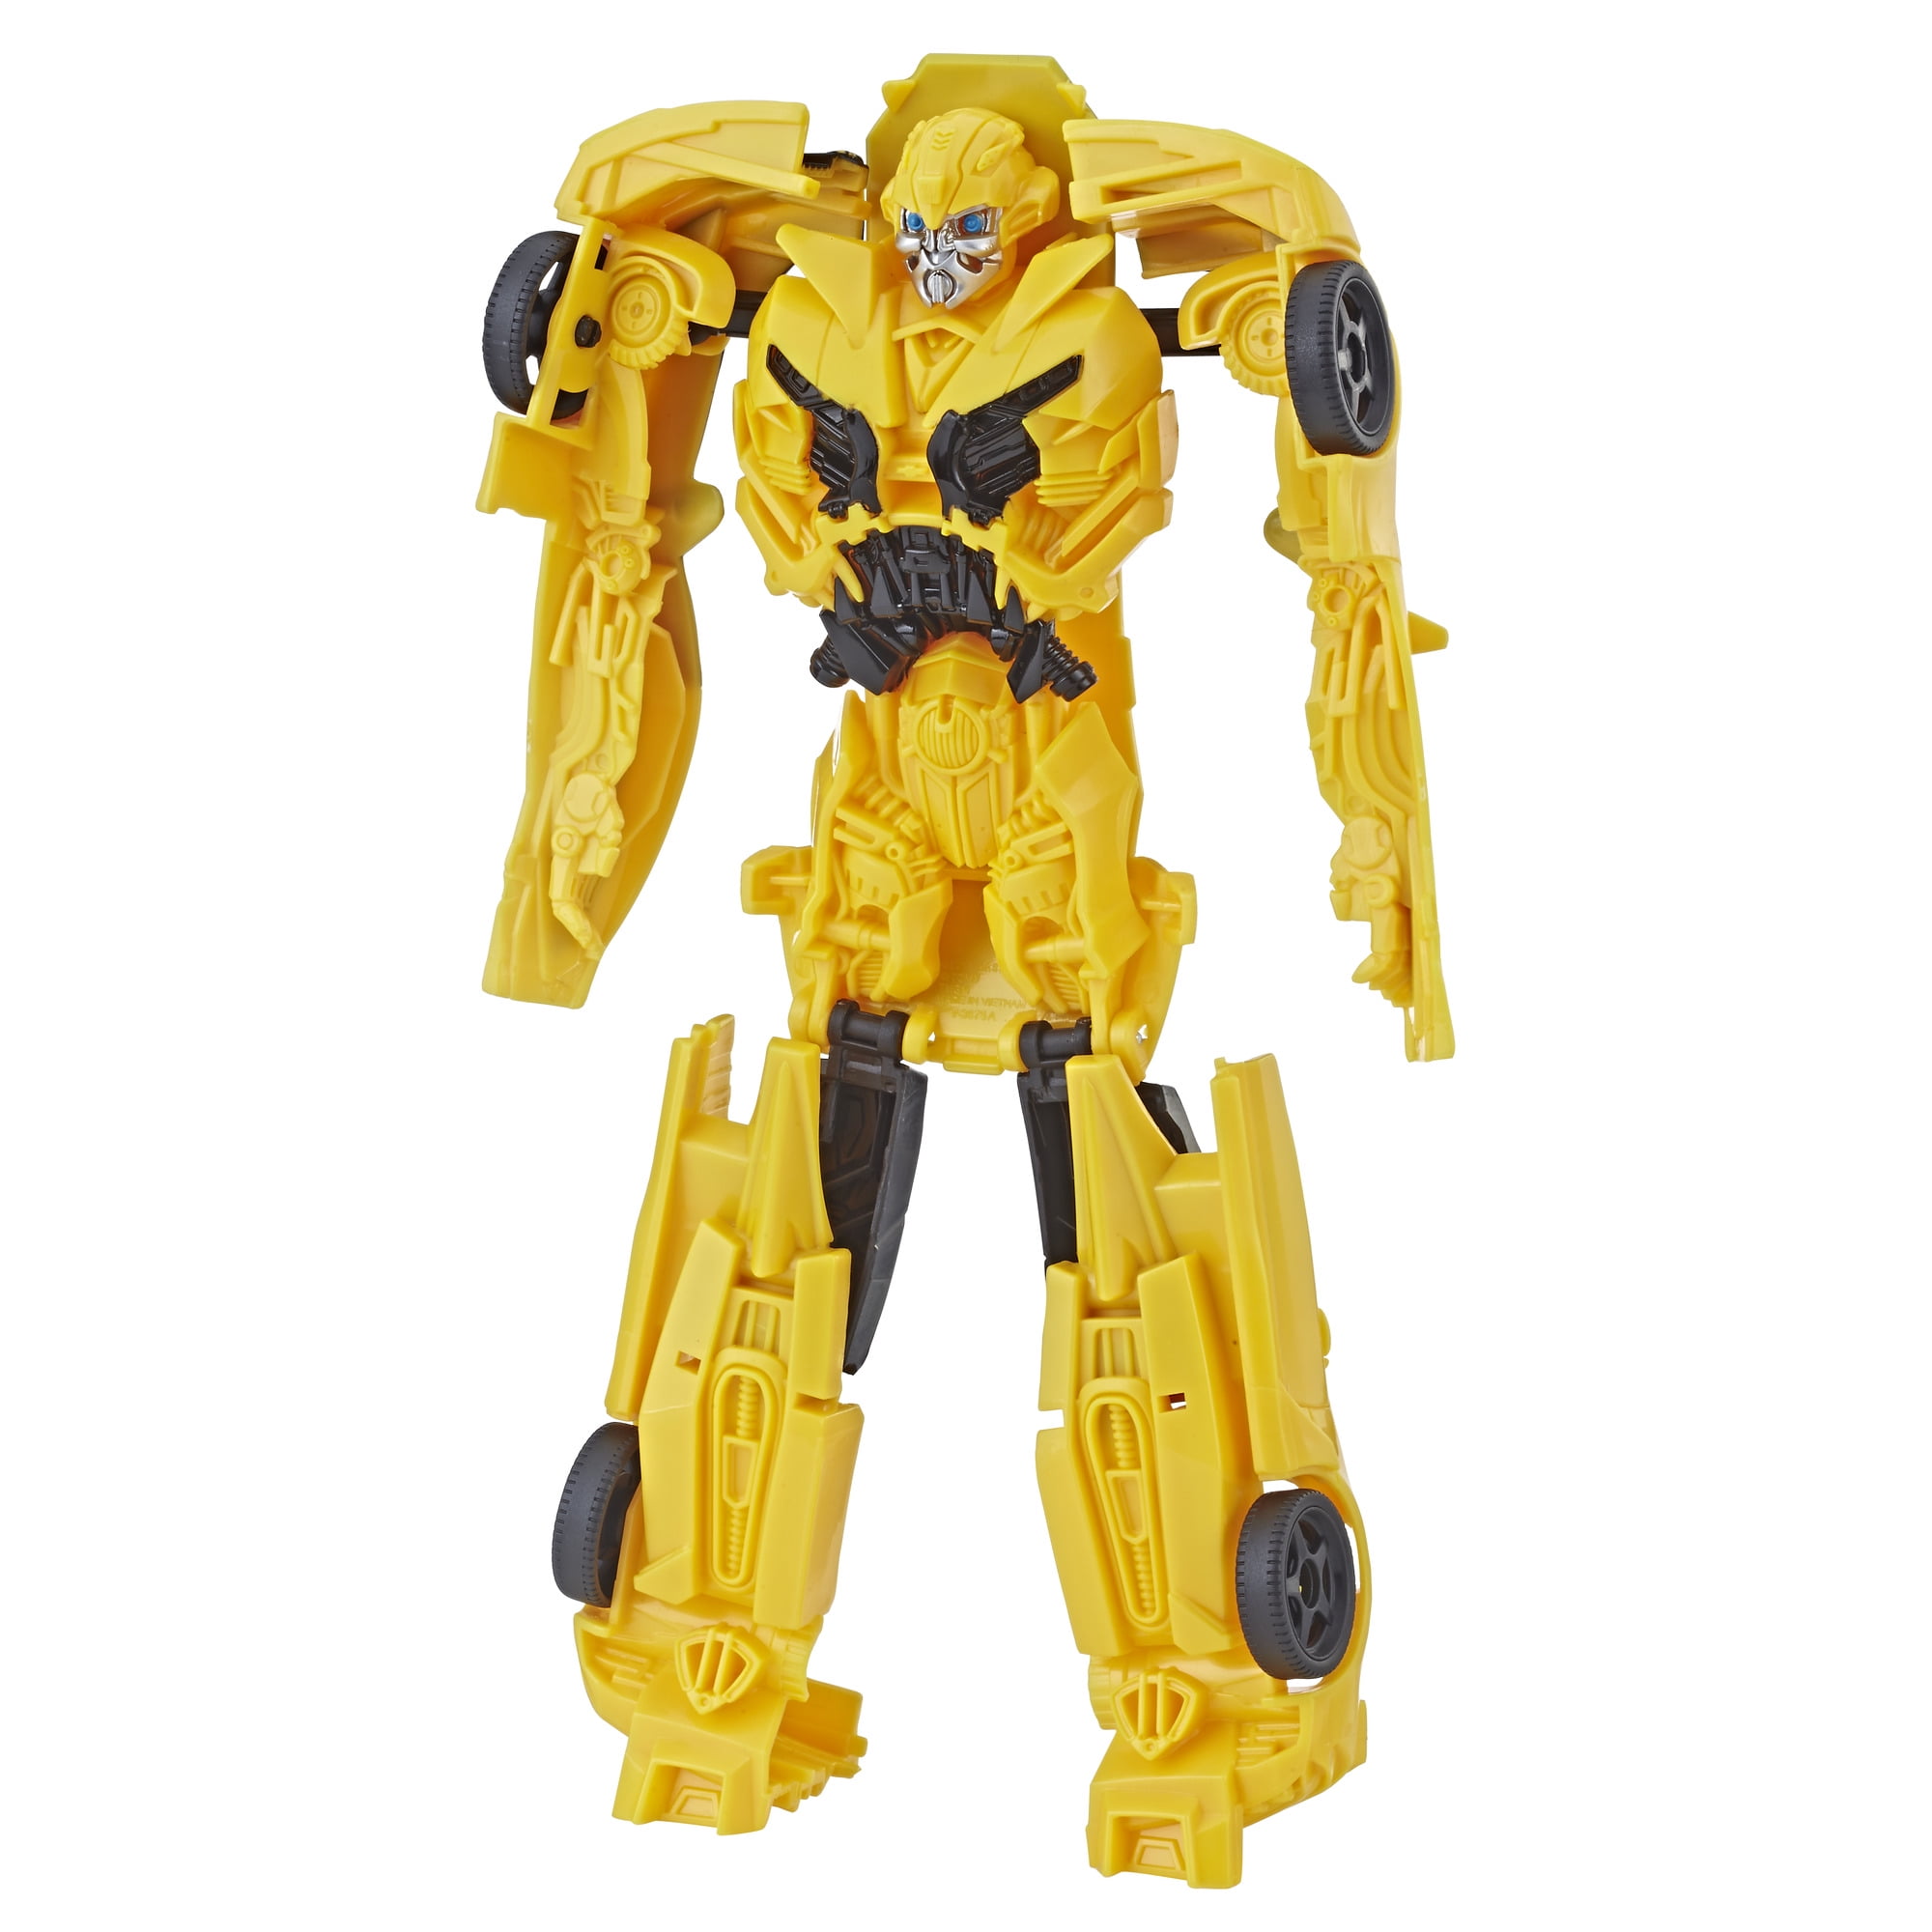 12 inch transformer action figure